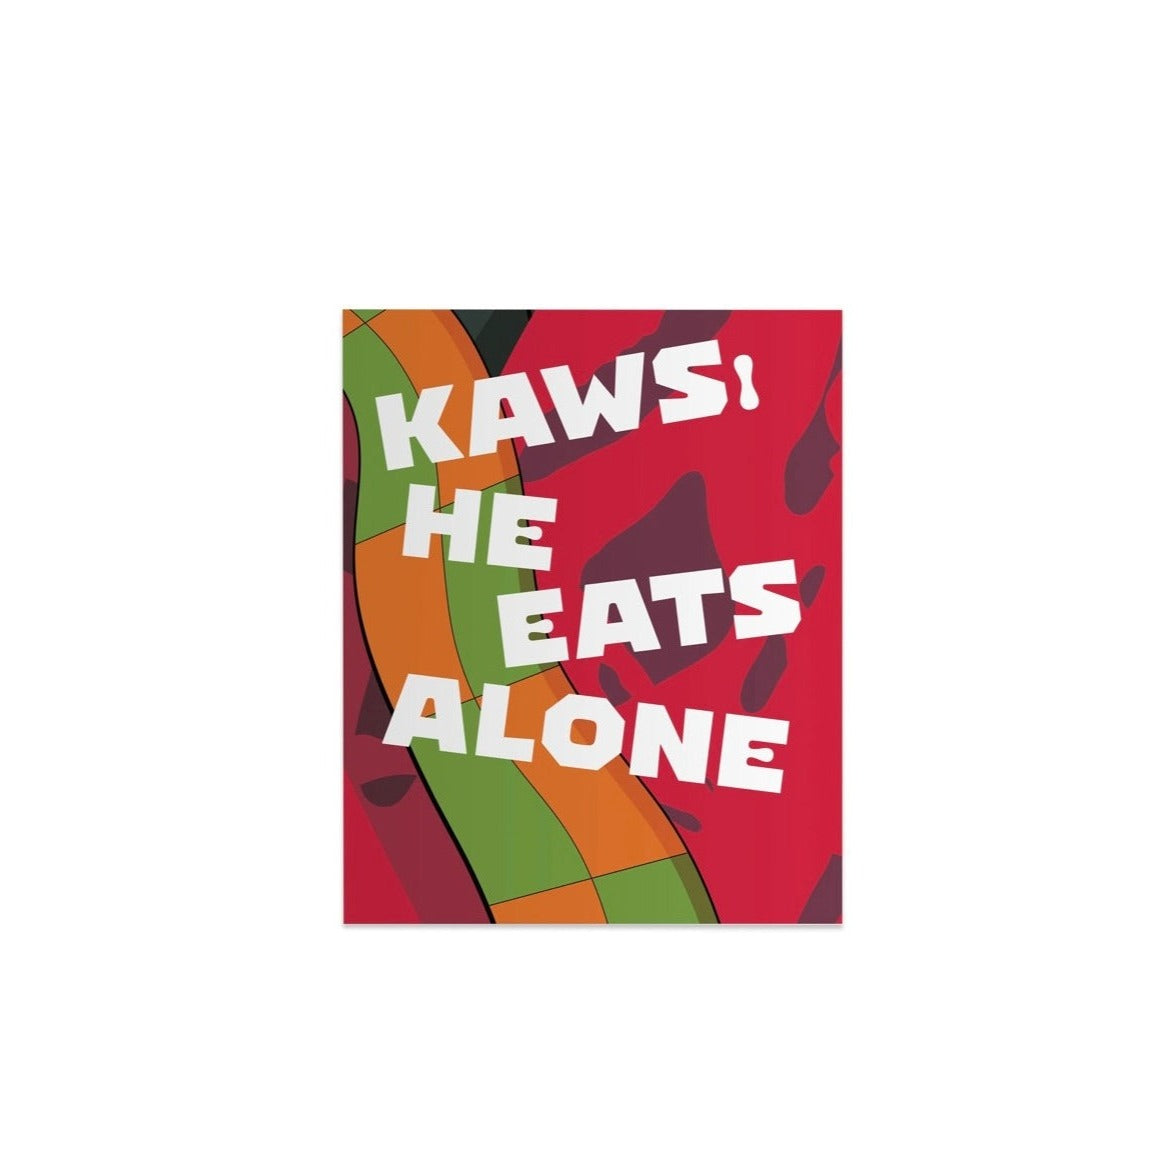 KAWS ! HE EATS ALONE BOOK